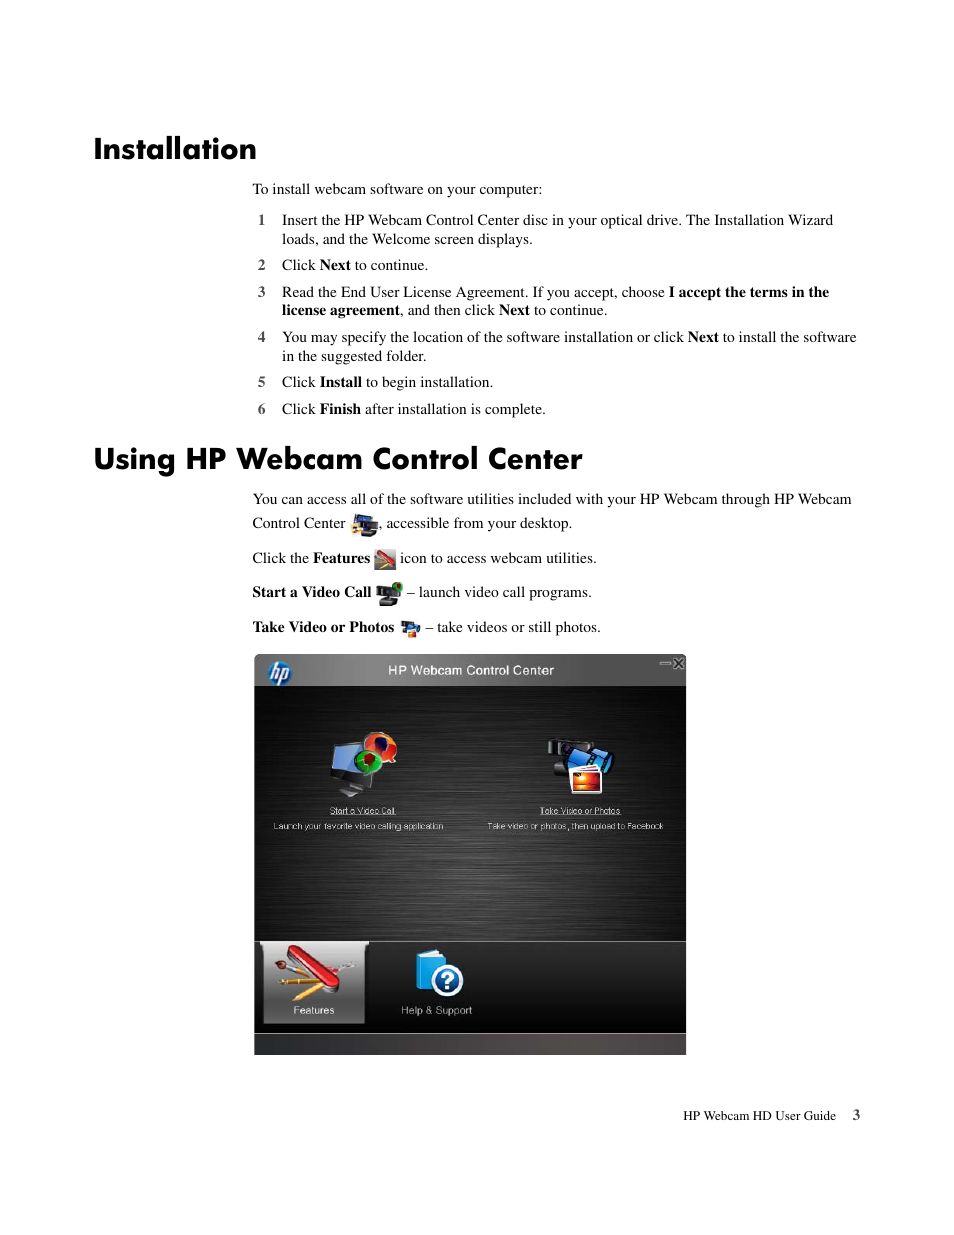 Installation, hp webcam control center | HP HD 2300 Webcam User Page 7 / 12